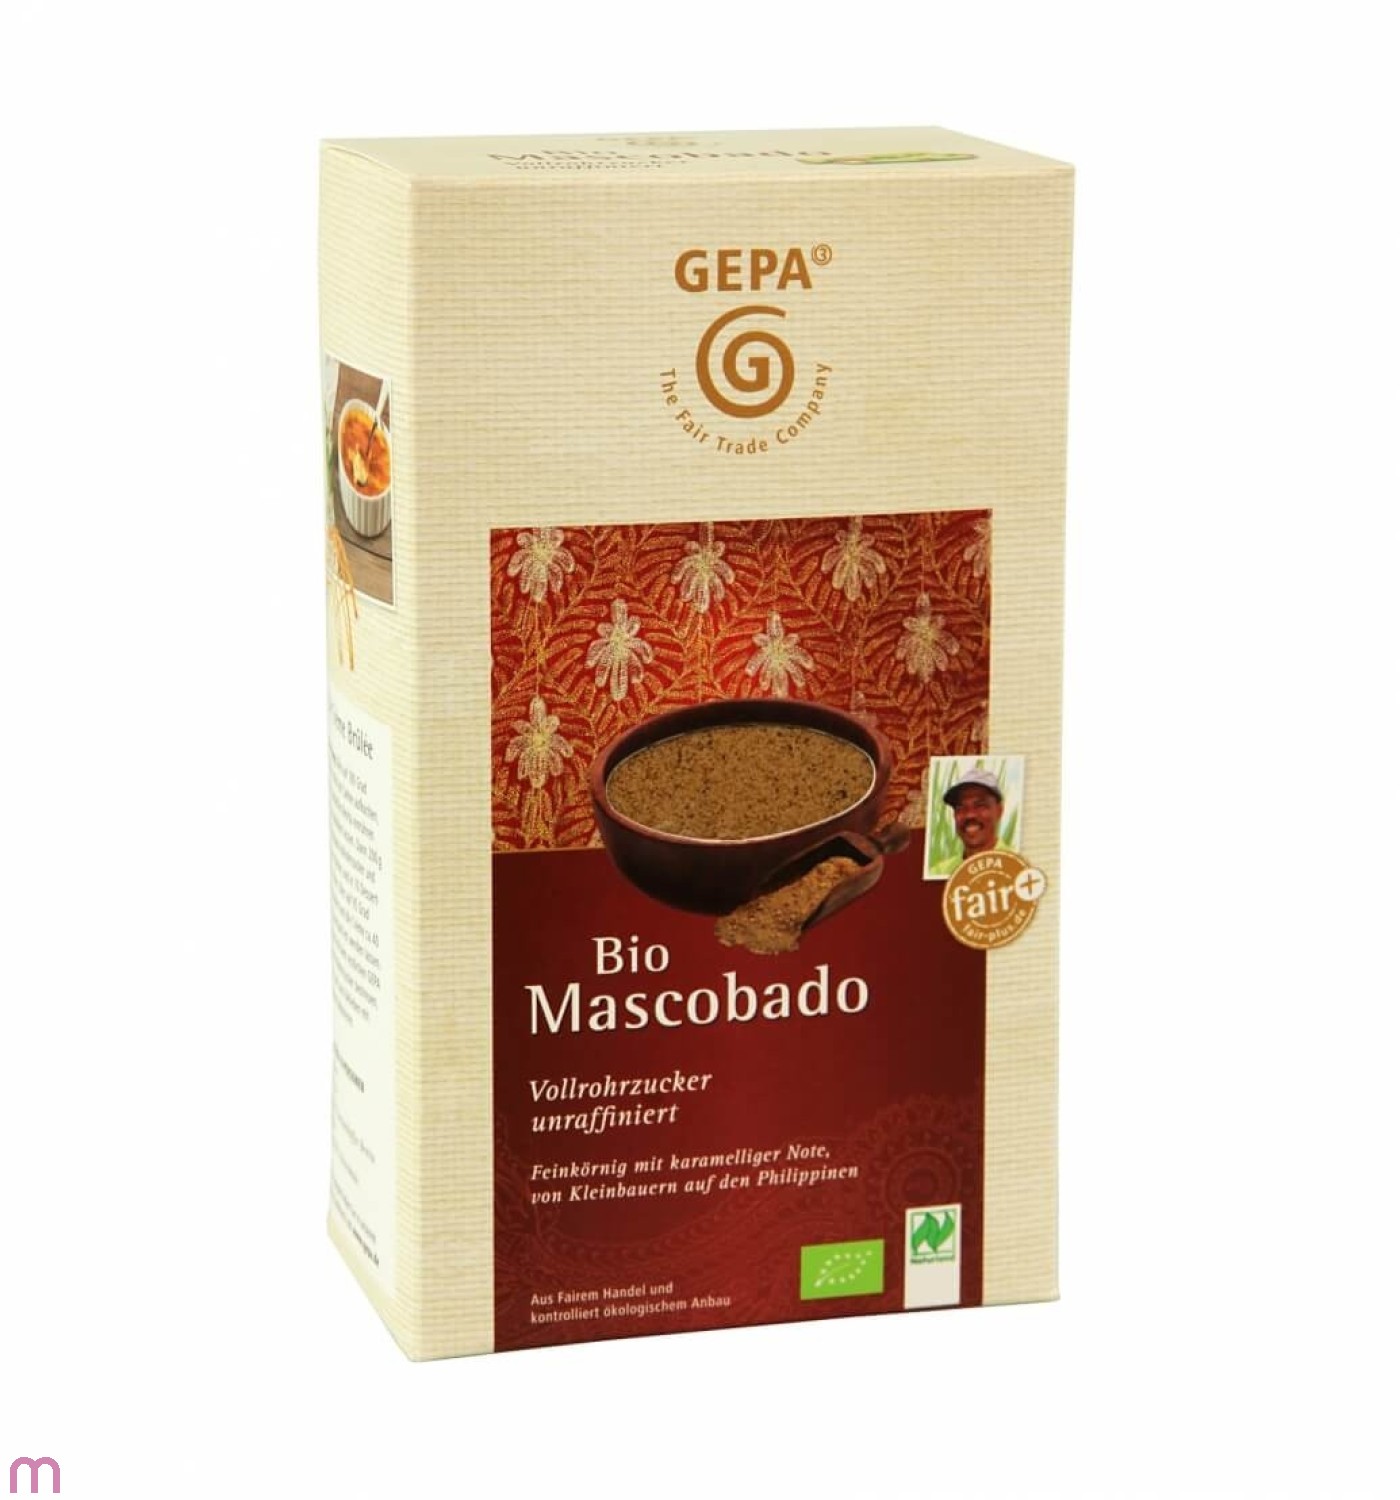 Gepa Bio Mascobado Vollrohrzucker 1kg, Bio Fairtrade, unraffiniert